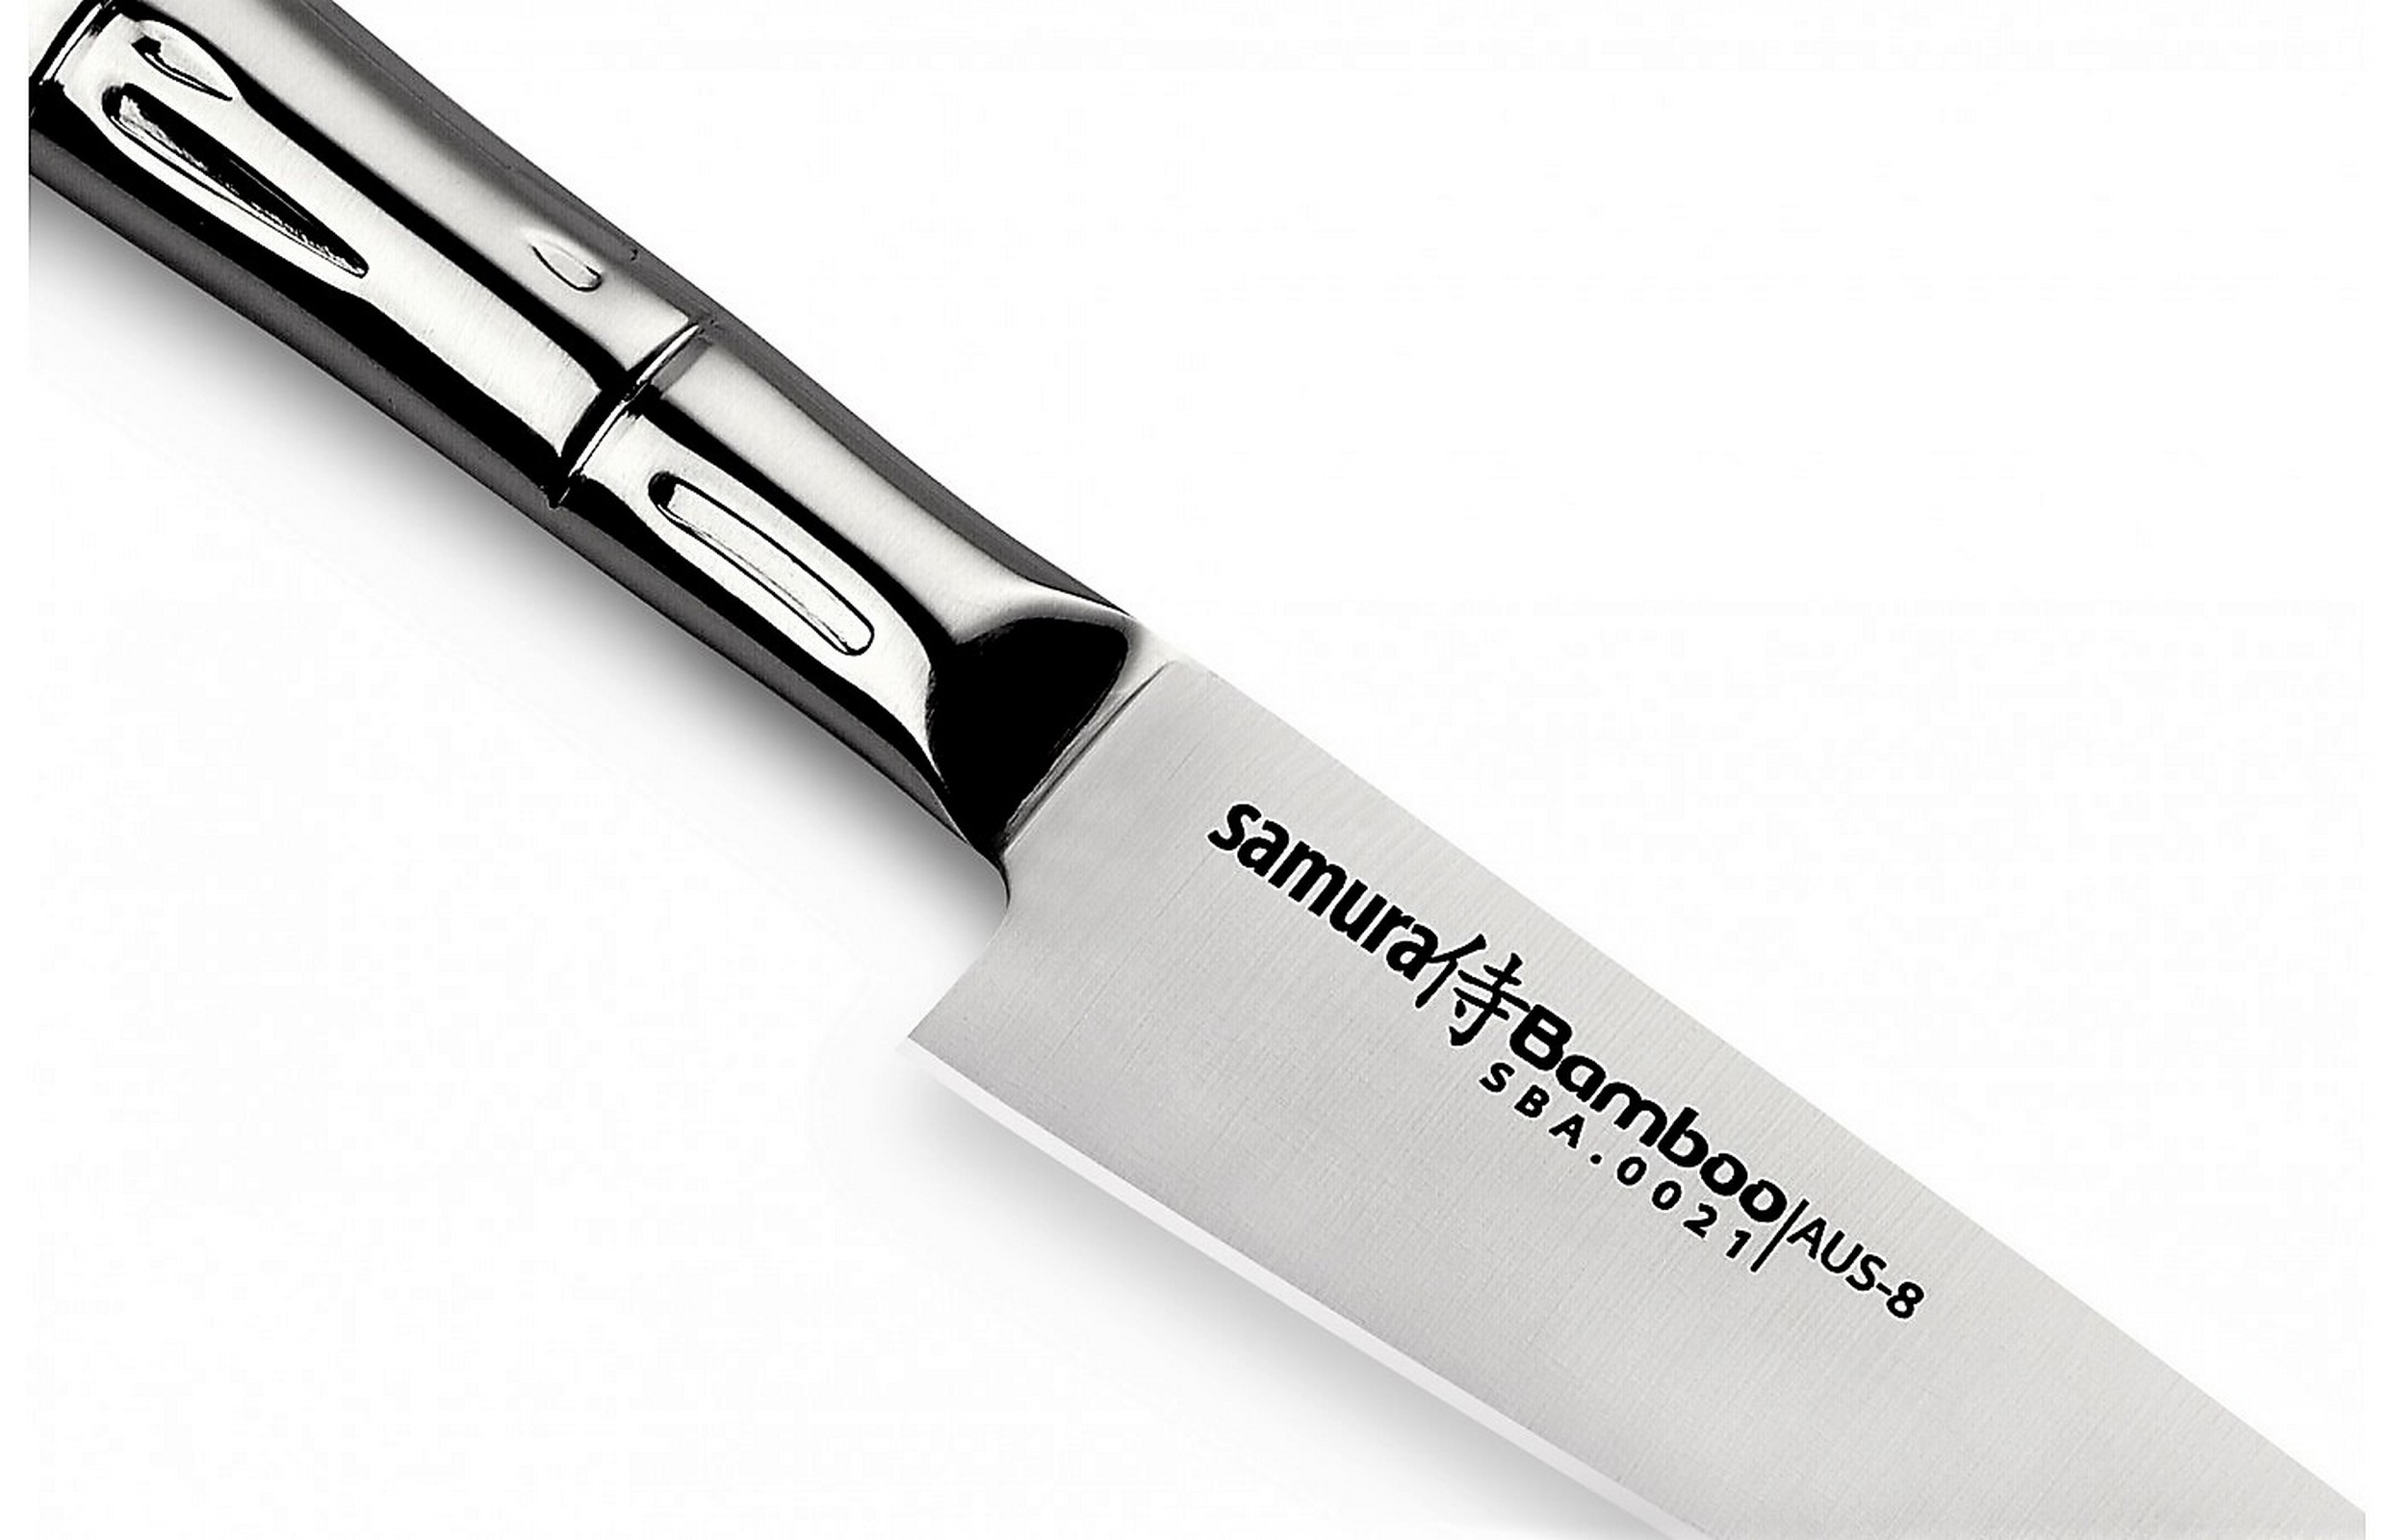 Küchenmesser Kochmesser SAMURA BAMBOO Universal Profi Messer AUS-8 Stahl 12 cm